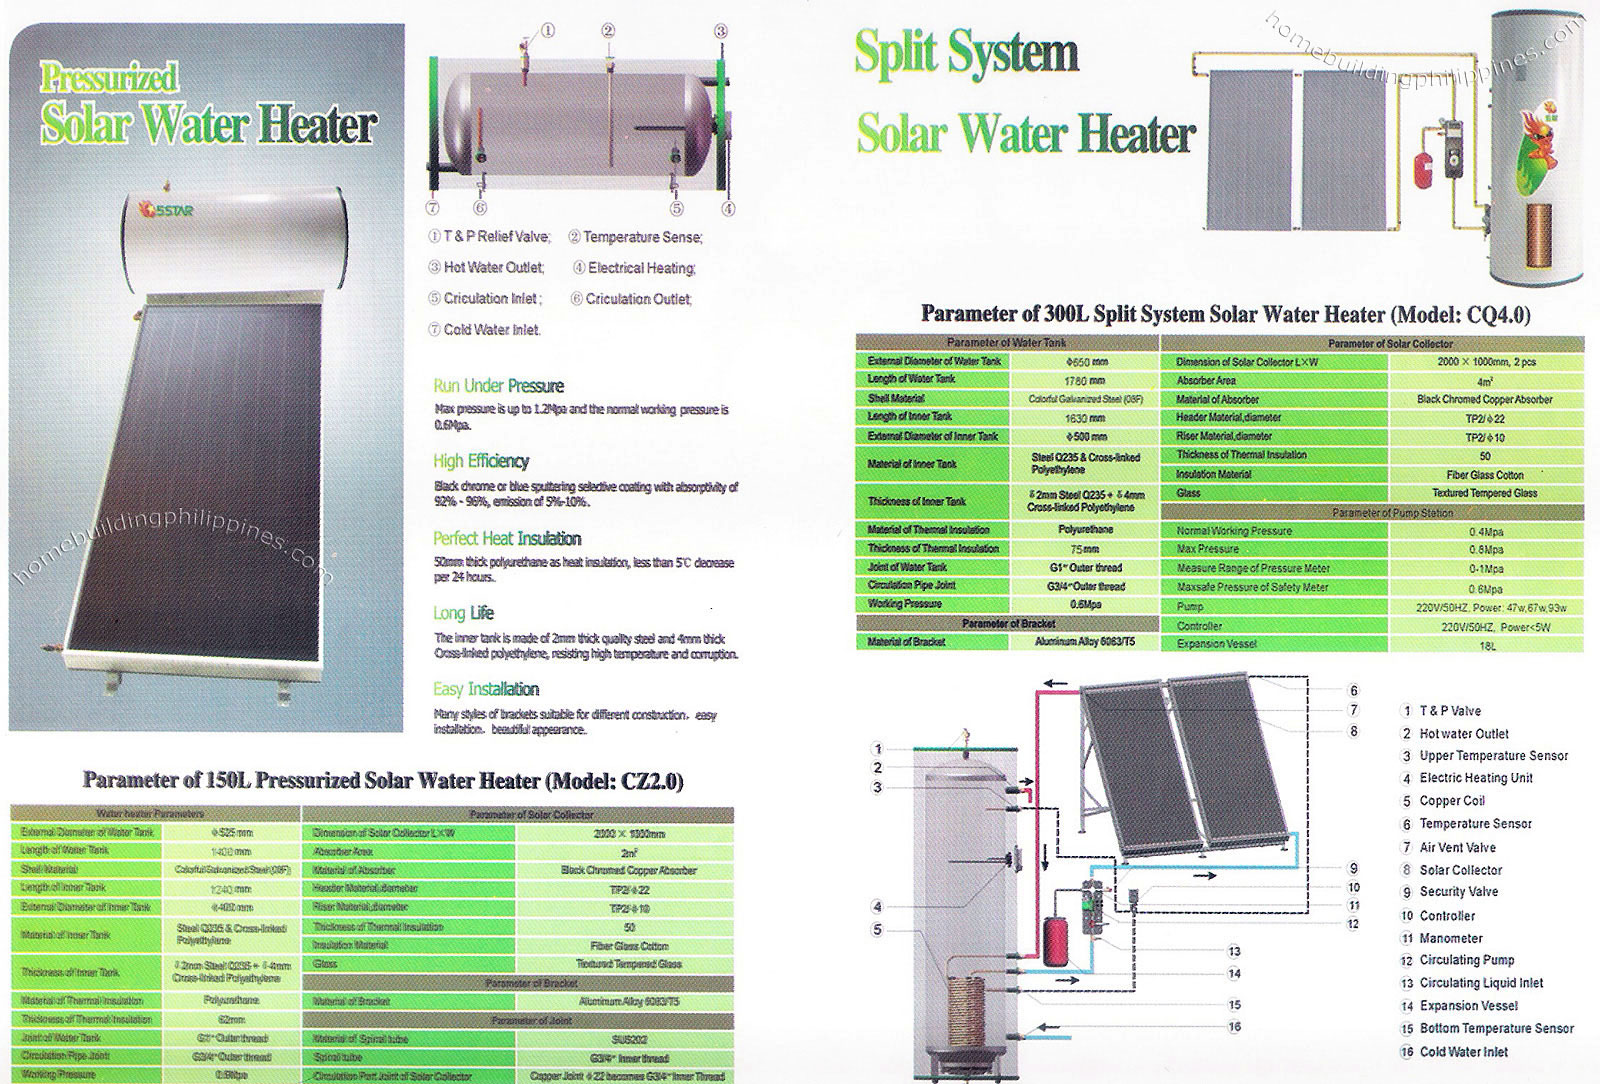 5Star Solar Water Heater